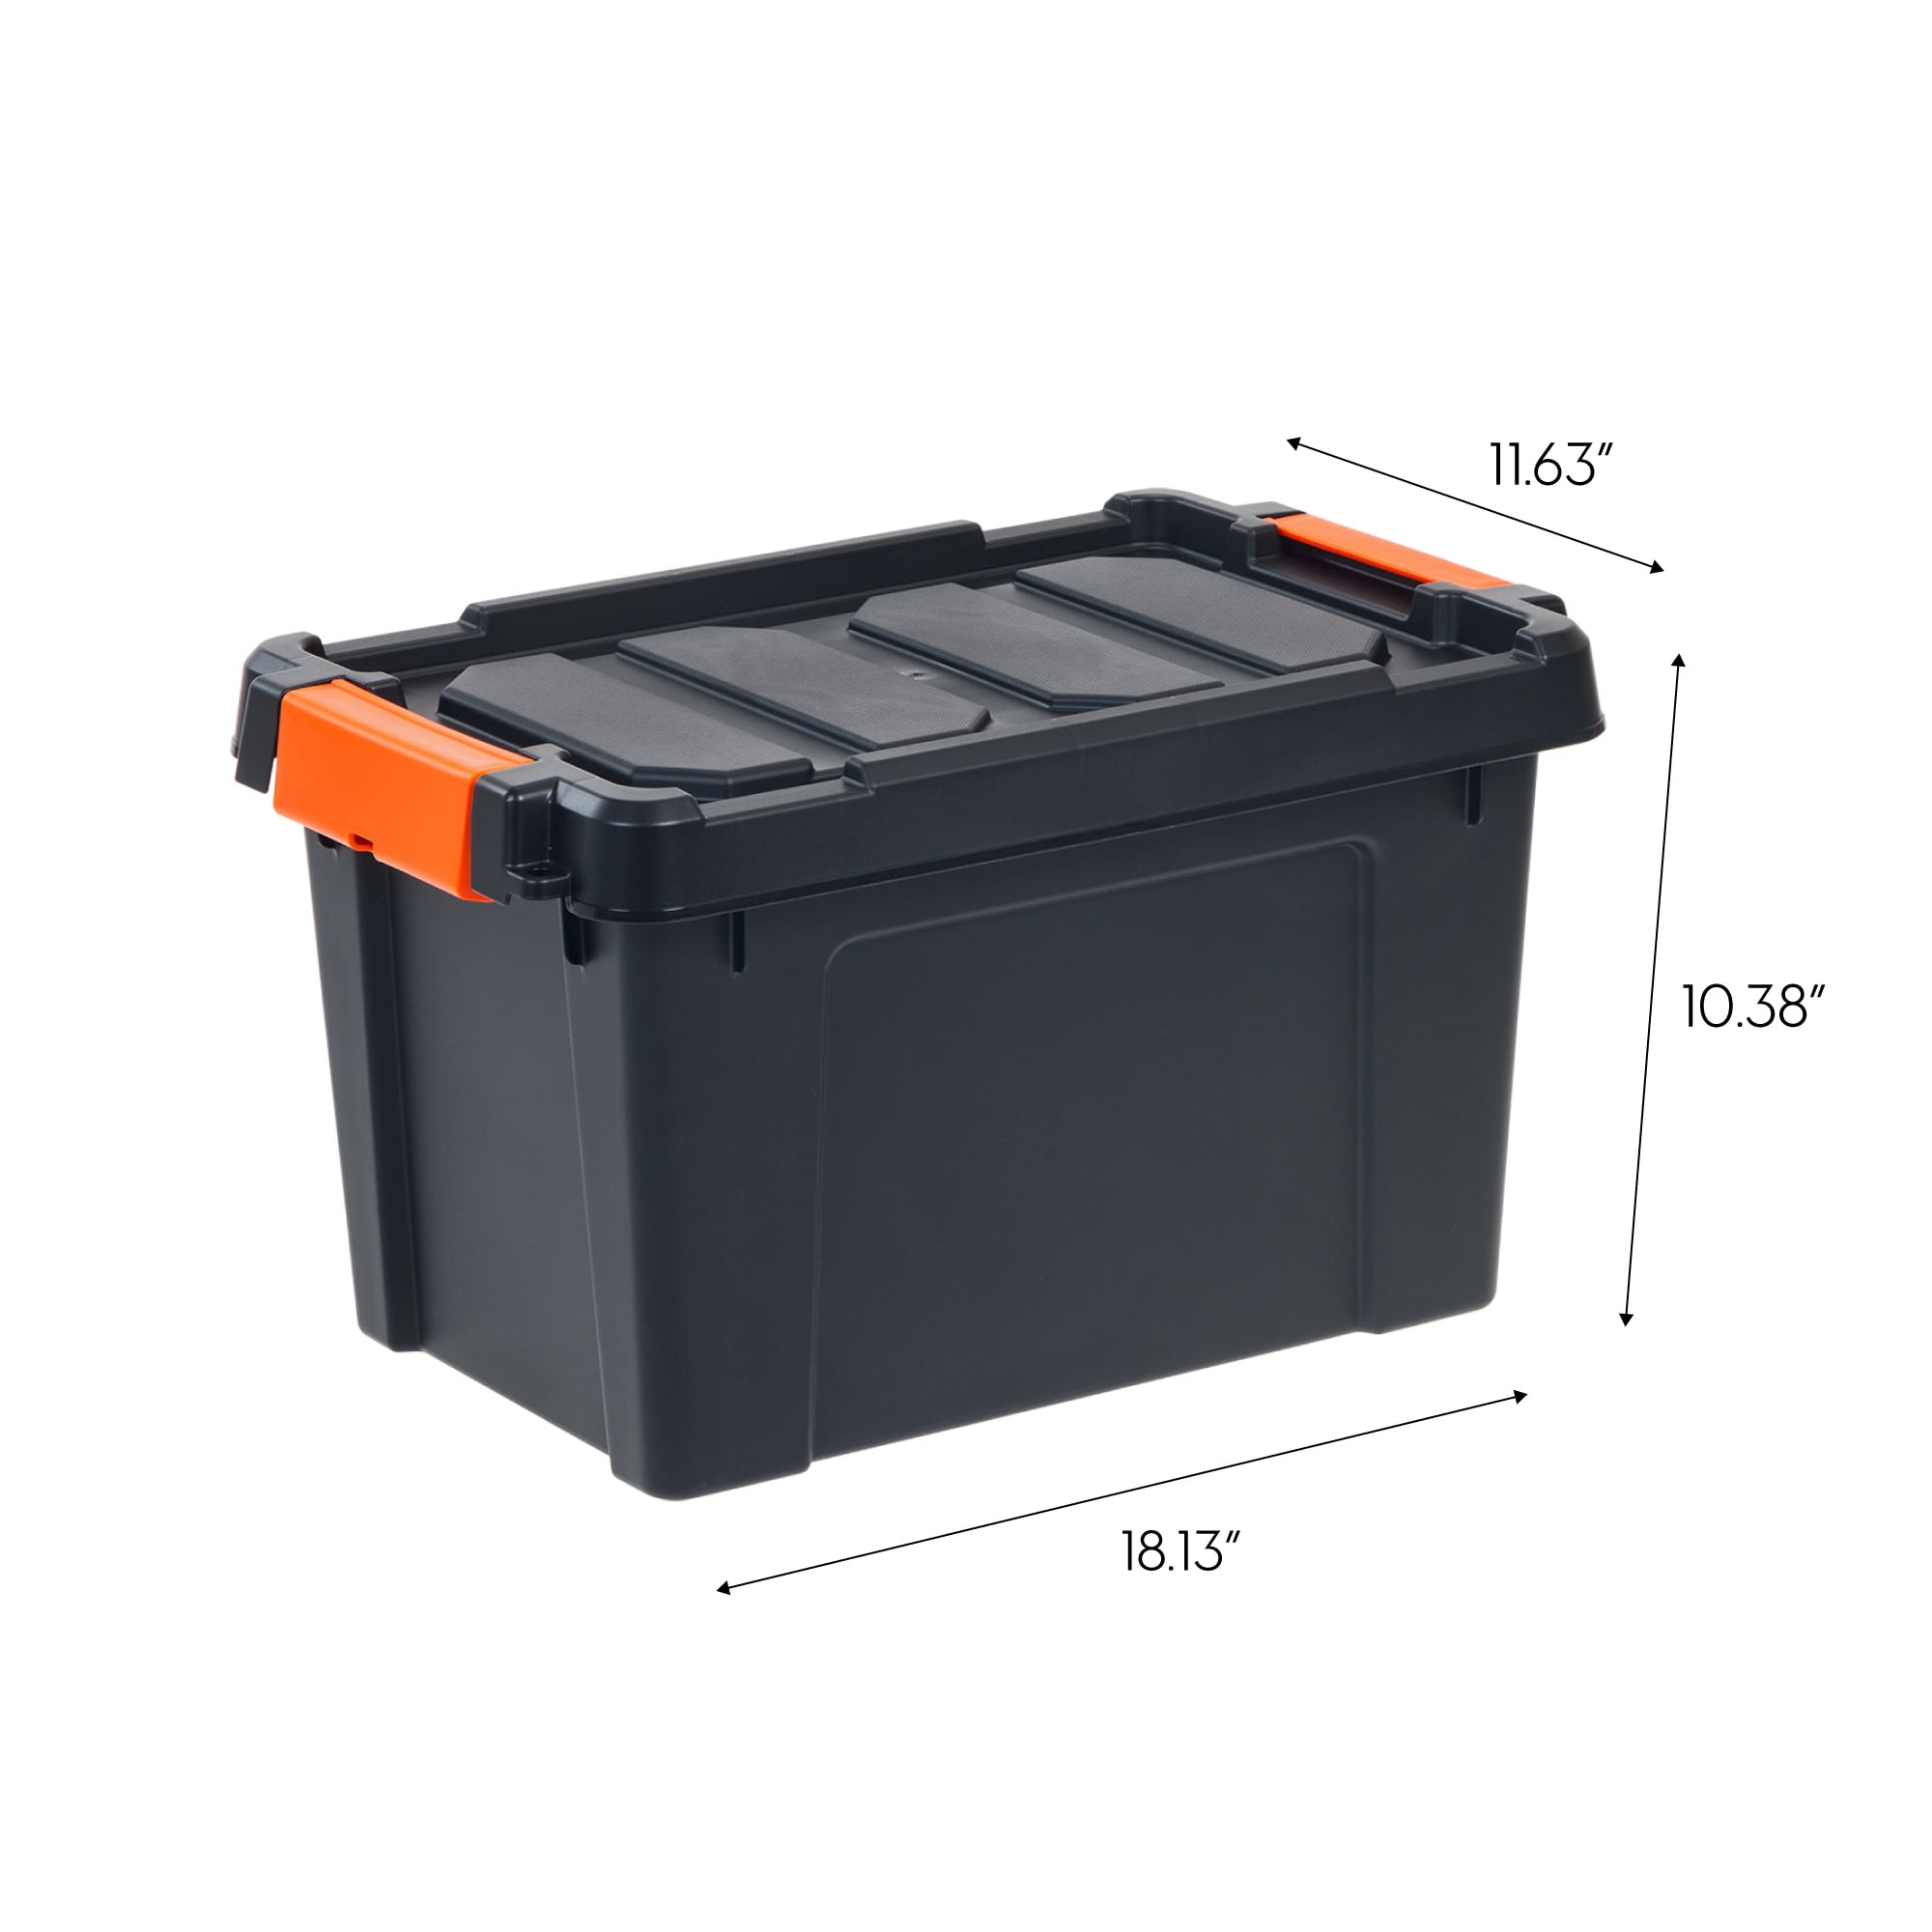 IRIS® Weathertight® Plastic Storage Containers With Latch Lids, 15 3/8 x  16 x 30, Black, Case Of 4 - Zerbee